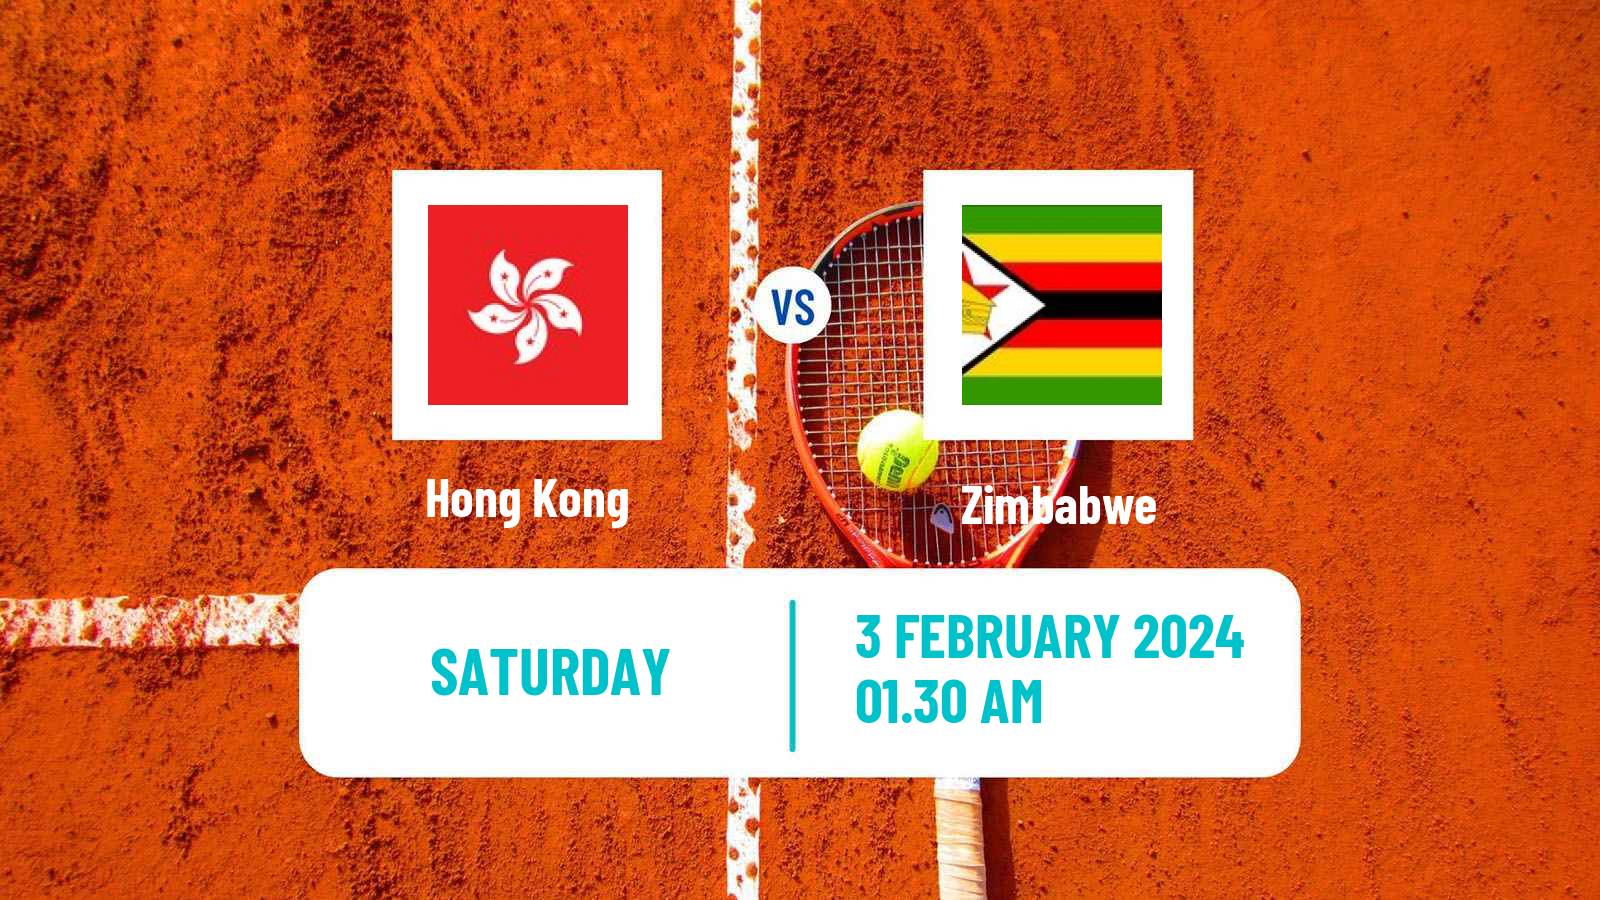 Tennis Davis Cup World Group II Teams Hong Kong - Zimbabwe